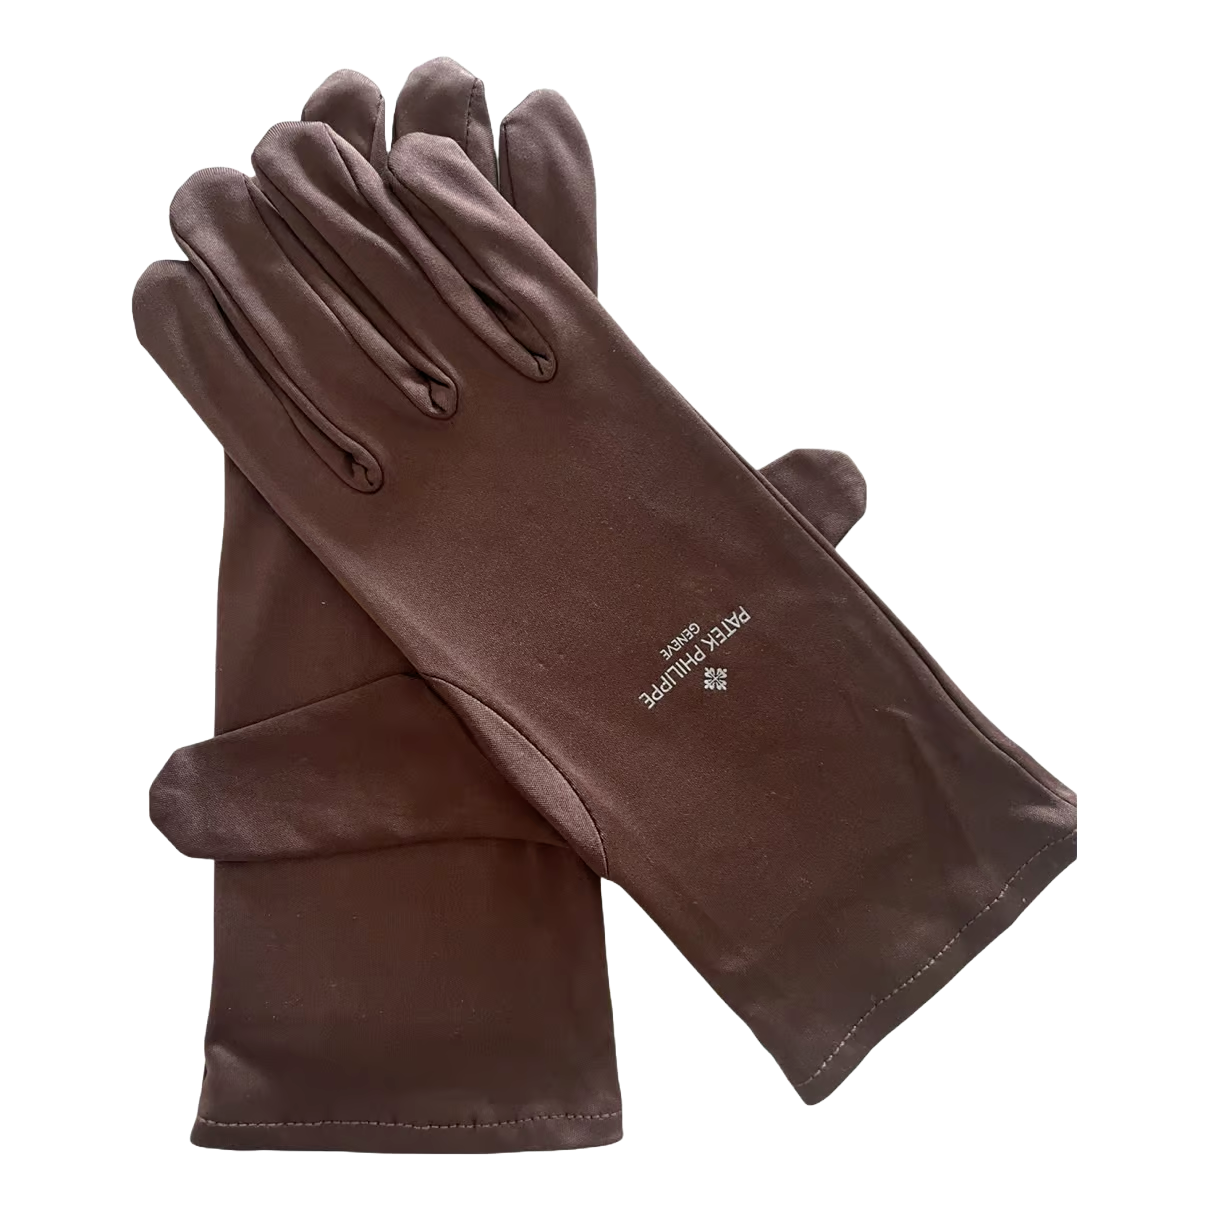 Patek Philippe Polyester Handschuhe Juwelier Handschuhe gloves Braun Brown